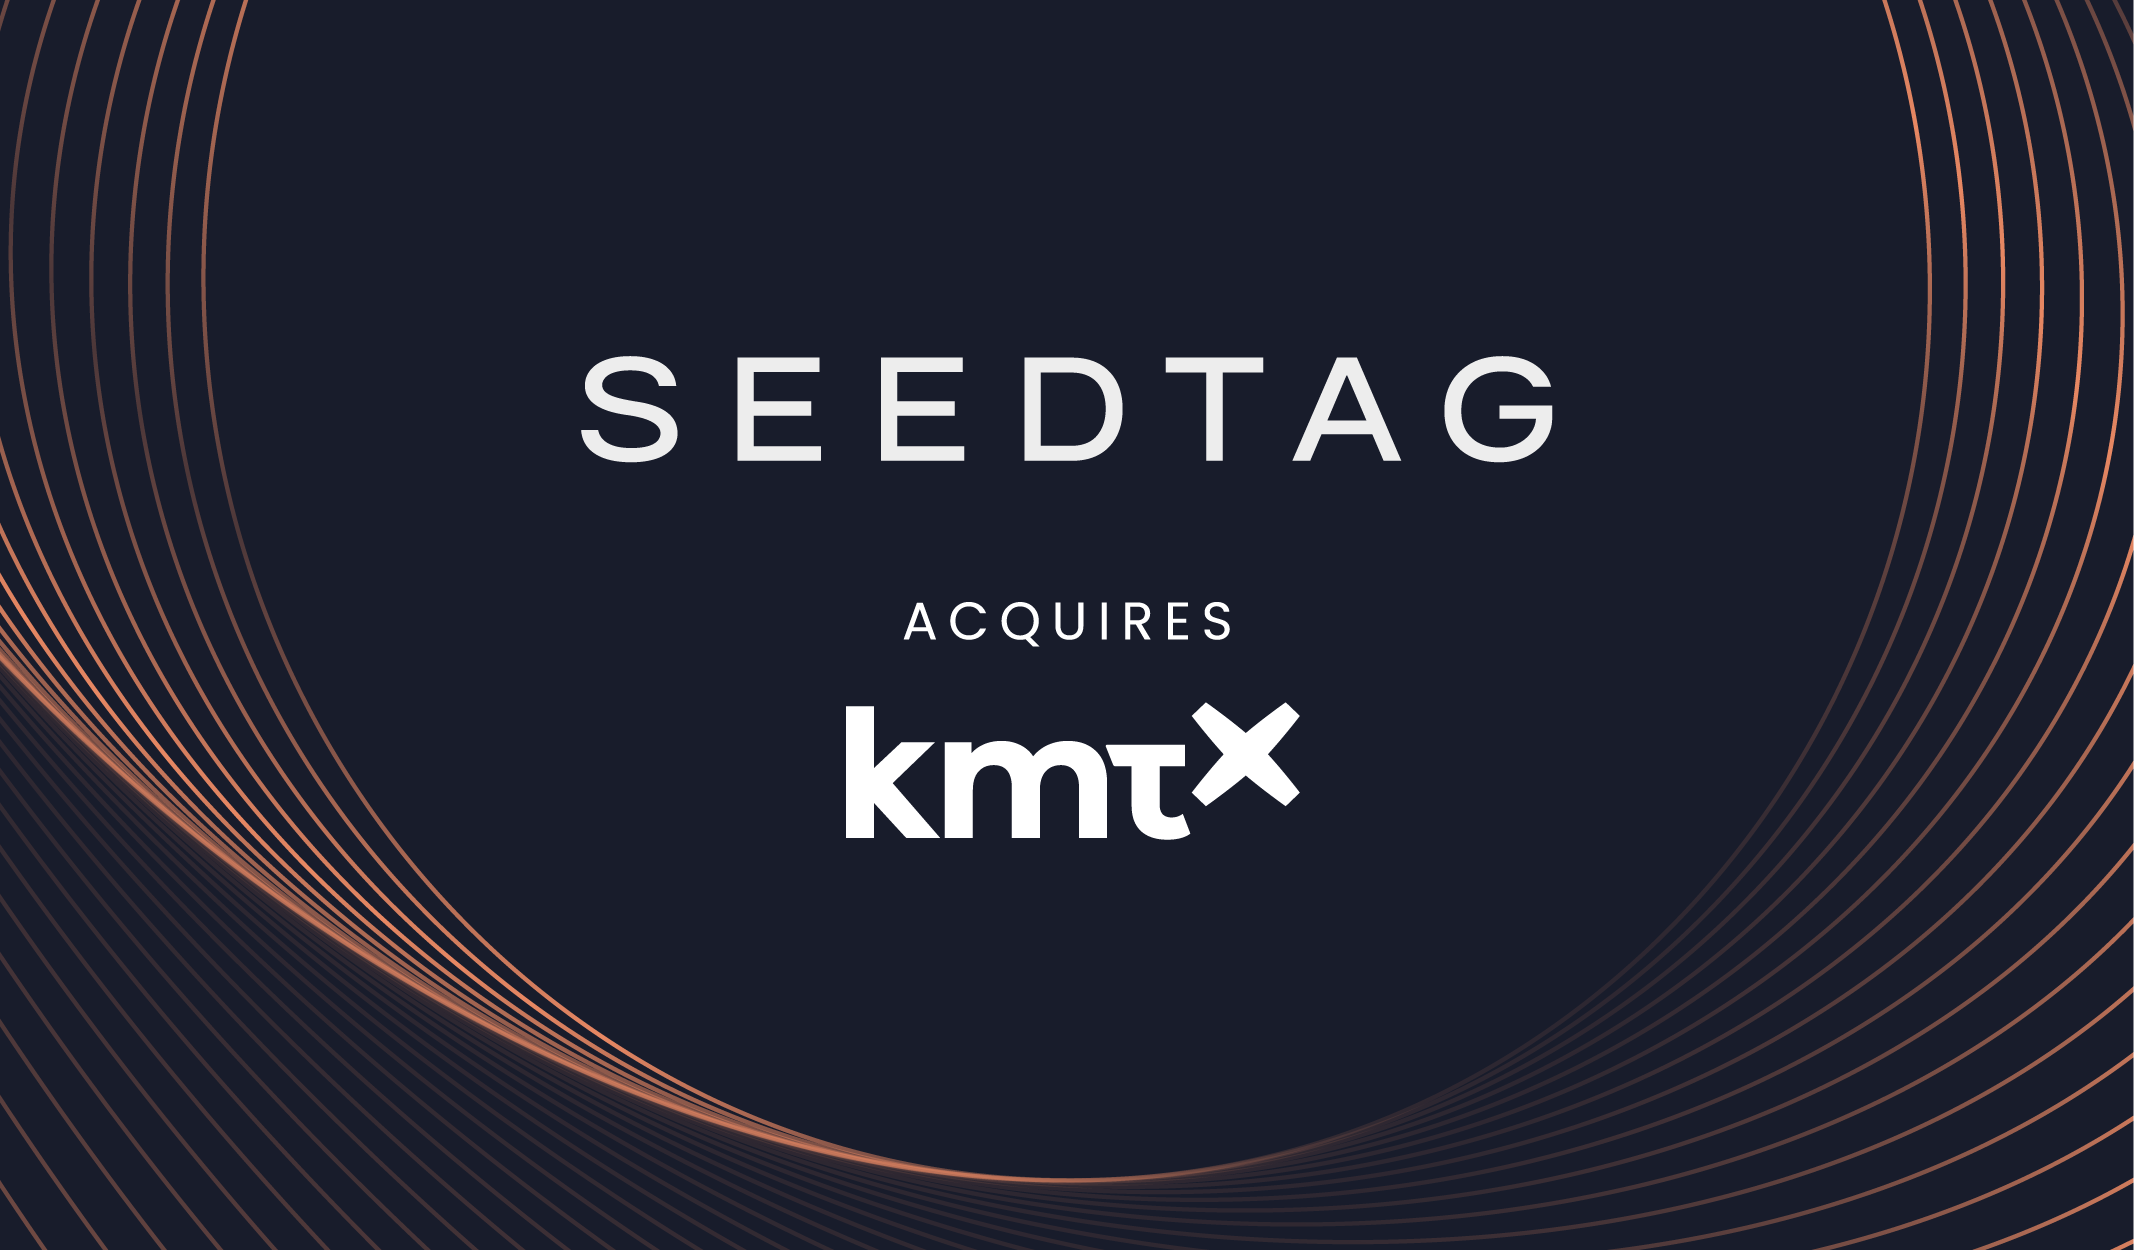 Seedtag acquires KMTX (1)